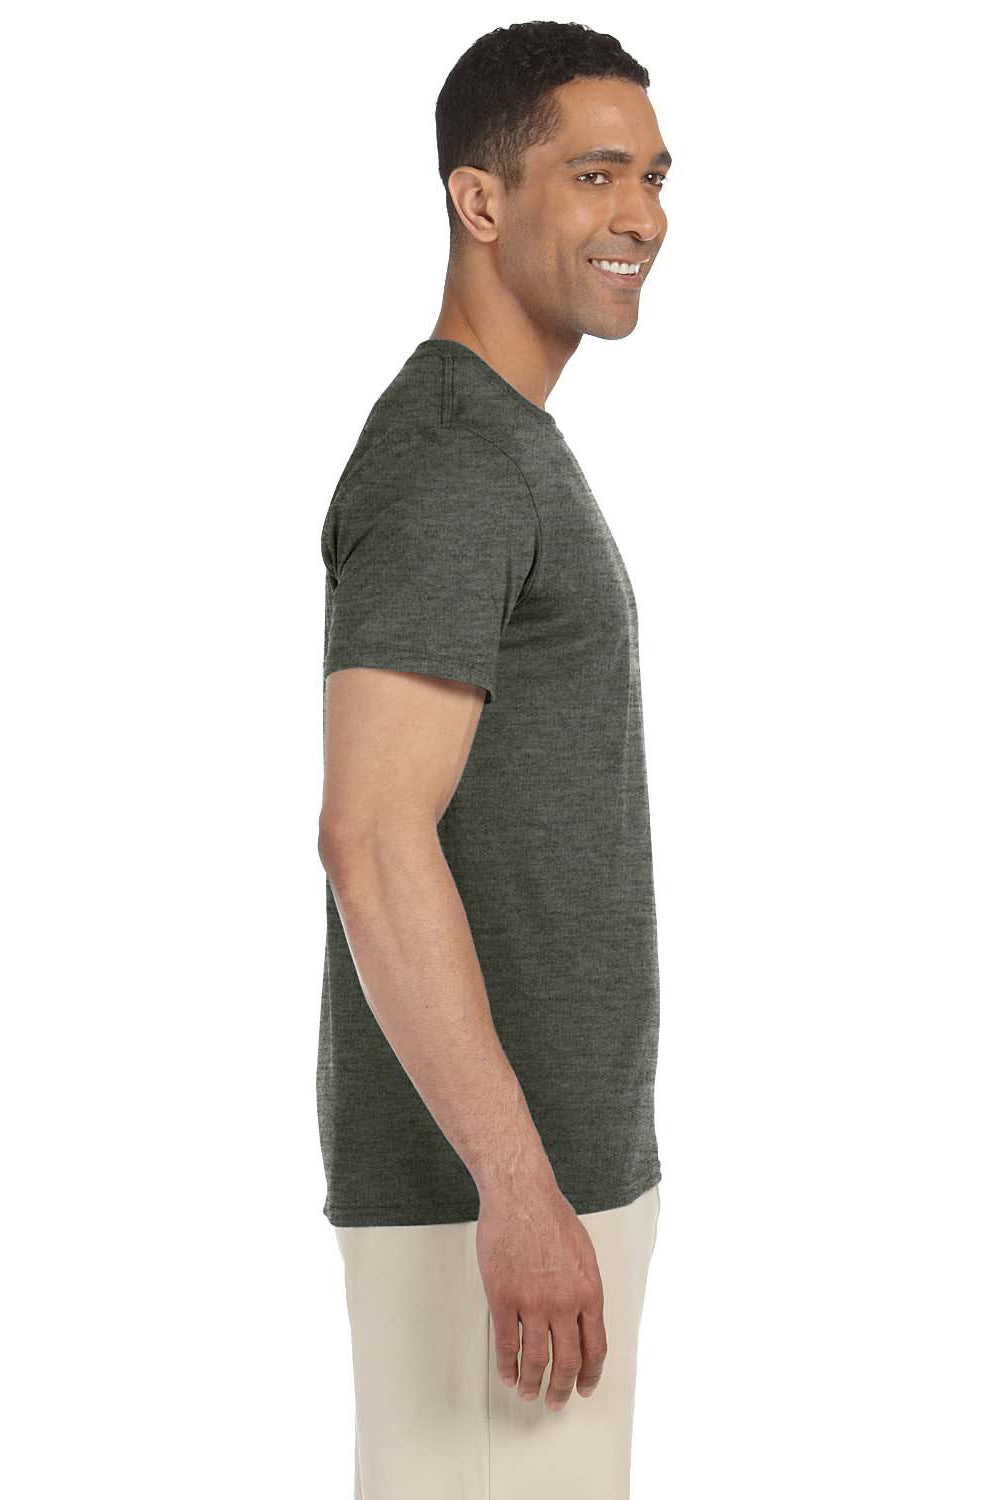 Gildan G640 Mens Softstyle Short Sleeve Crewneck T-Shirt Heather Military Green Side